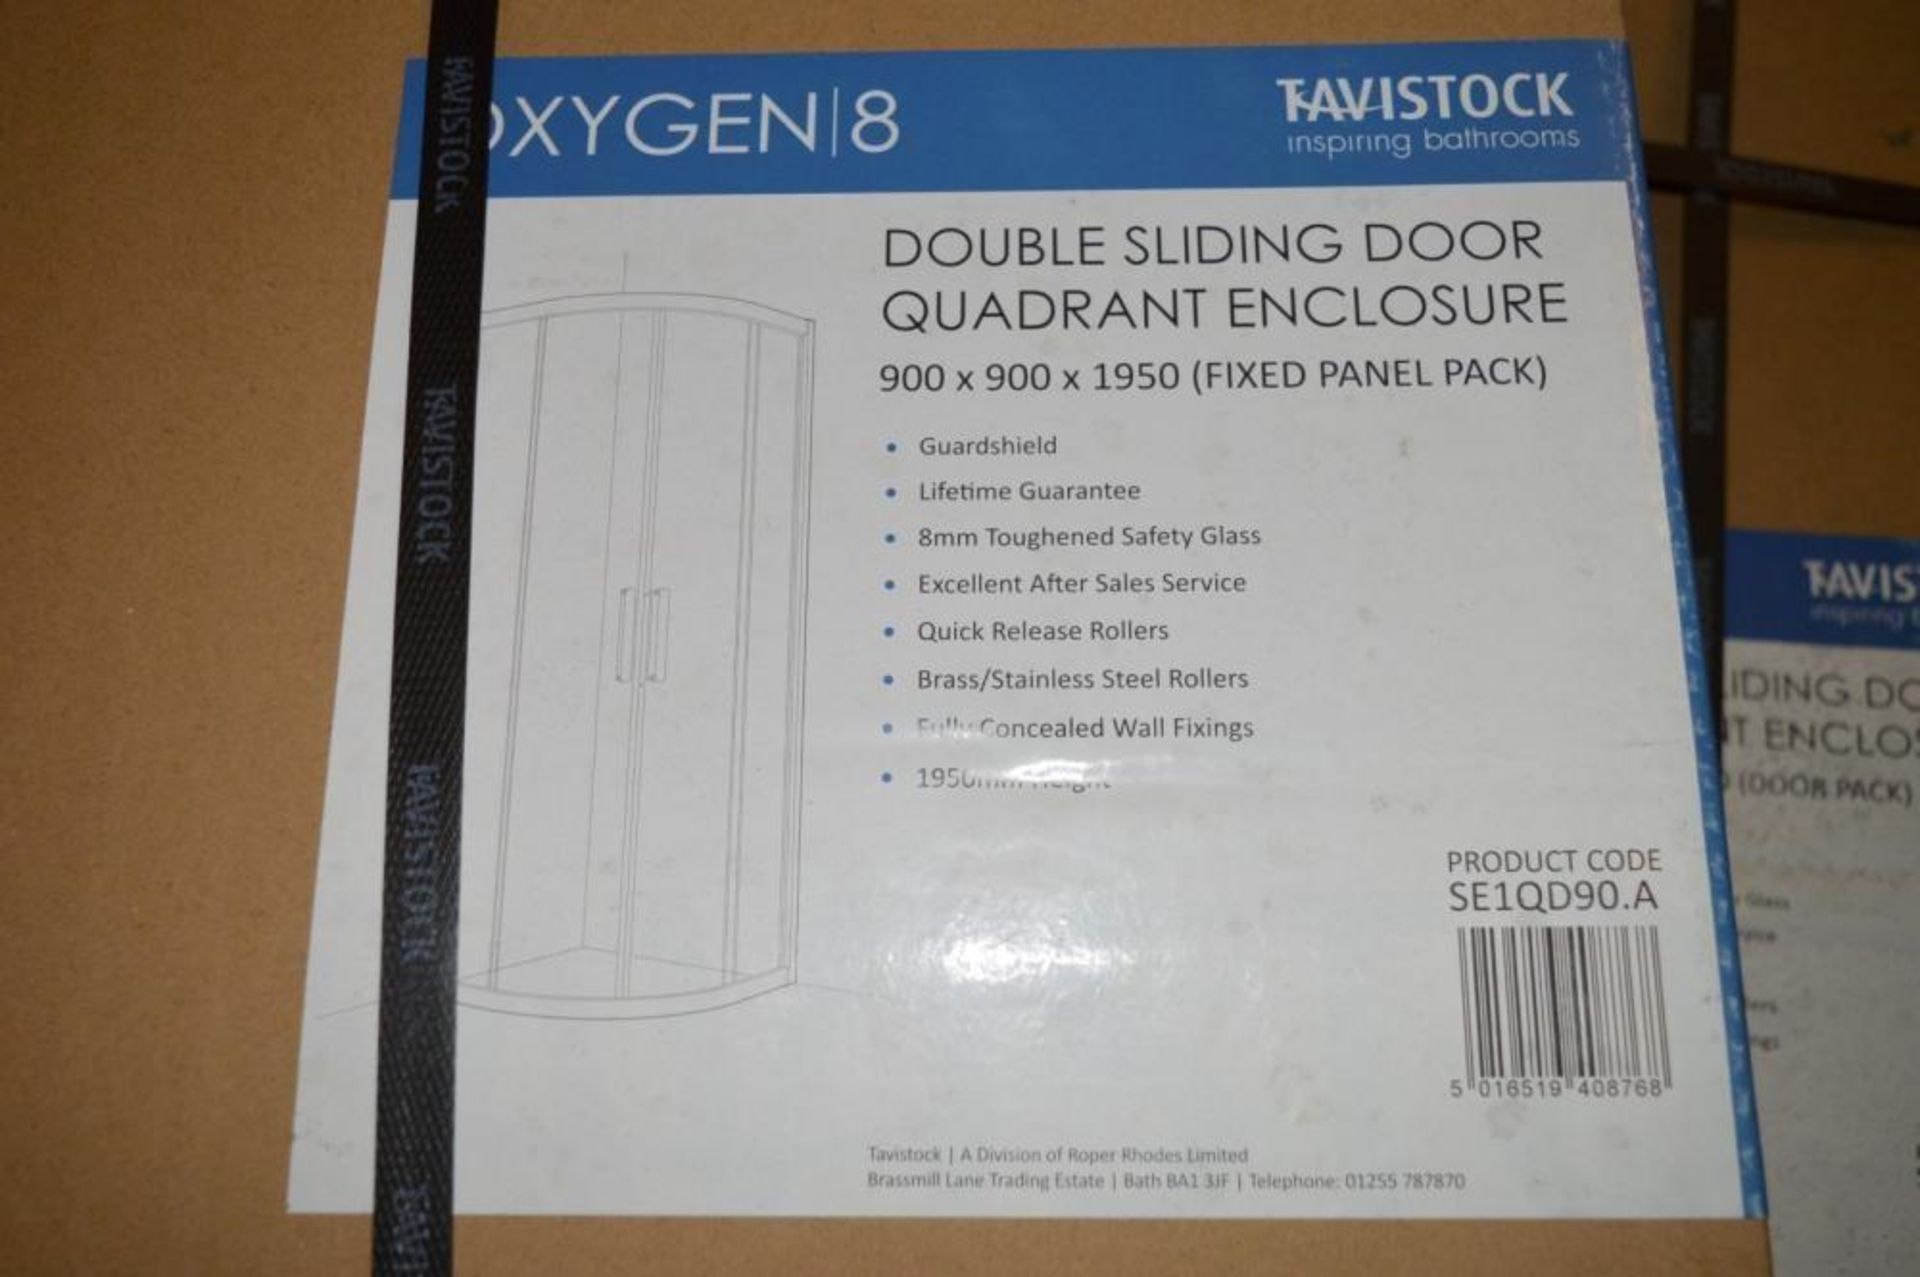 1 x Tavistock Oxygen 8 Double Sliding Door Quadrant Shower Enclosure - 900x900x1950mm - New Boxed St - Image 2 of 2